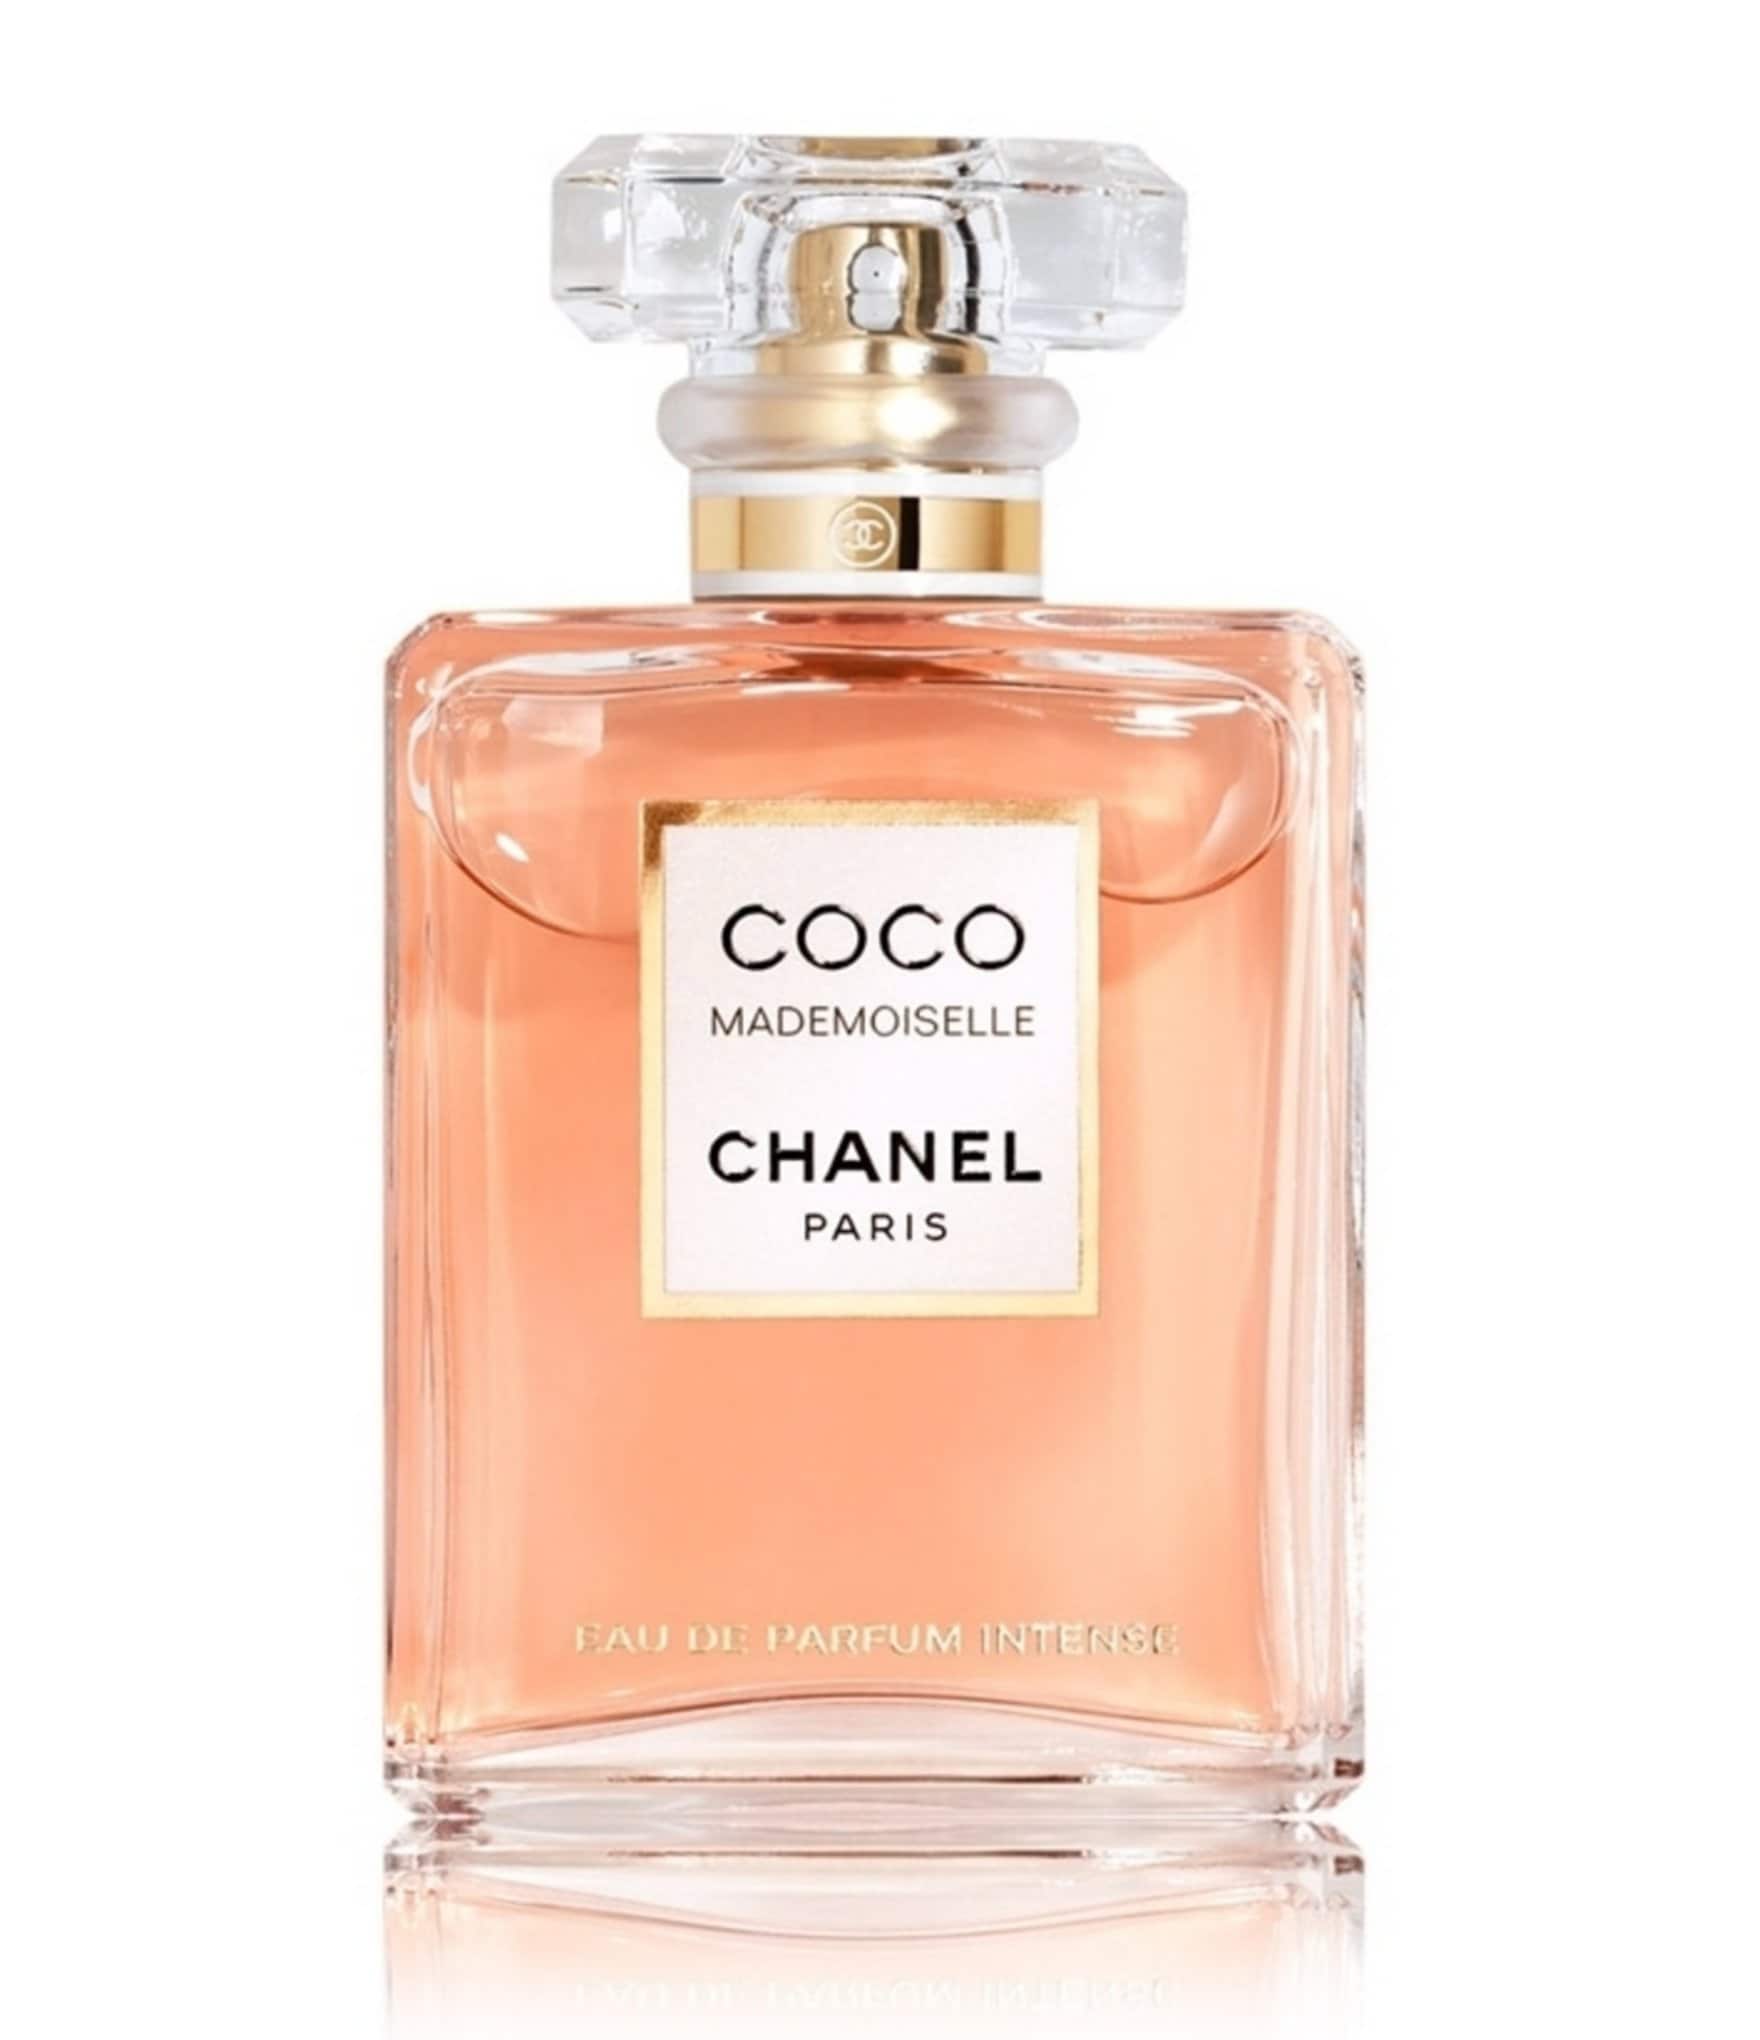 mademoiselle chanel parfum